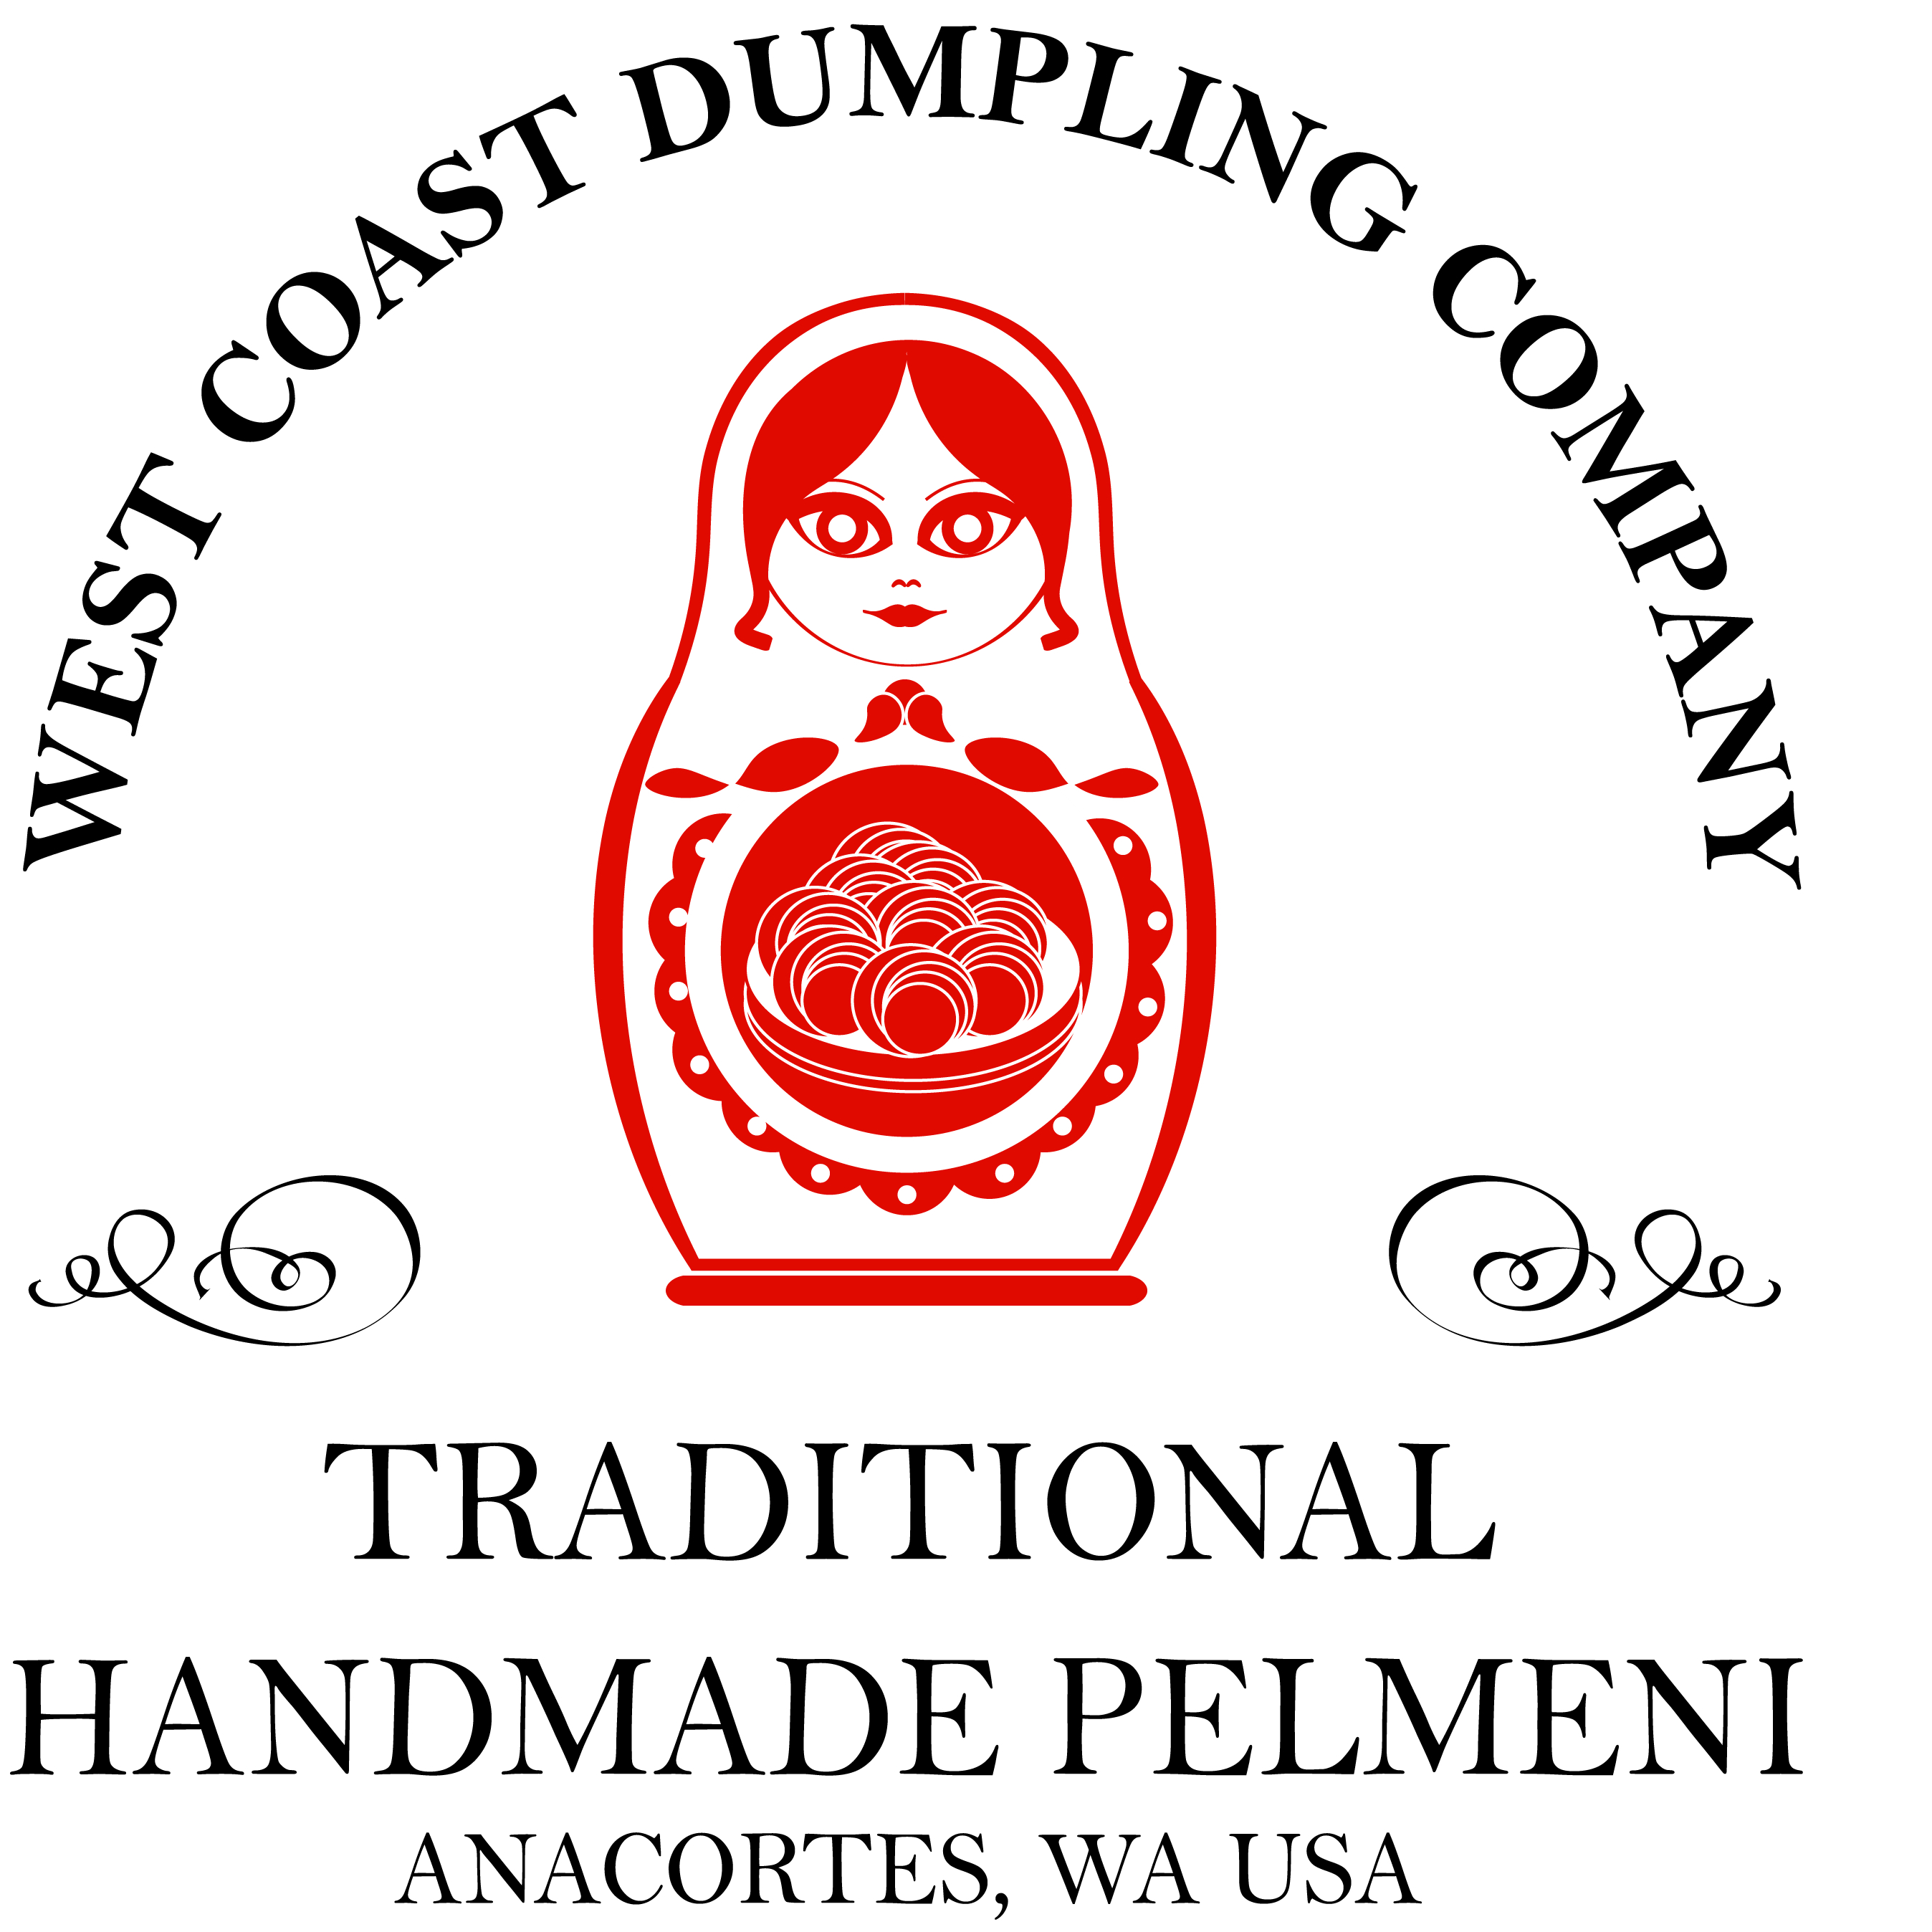 West Coast Dumpling Company